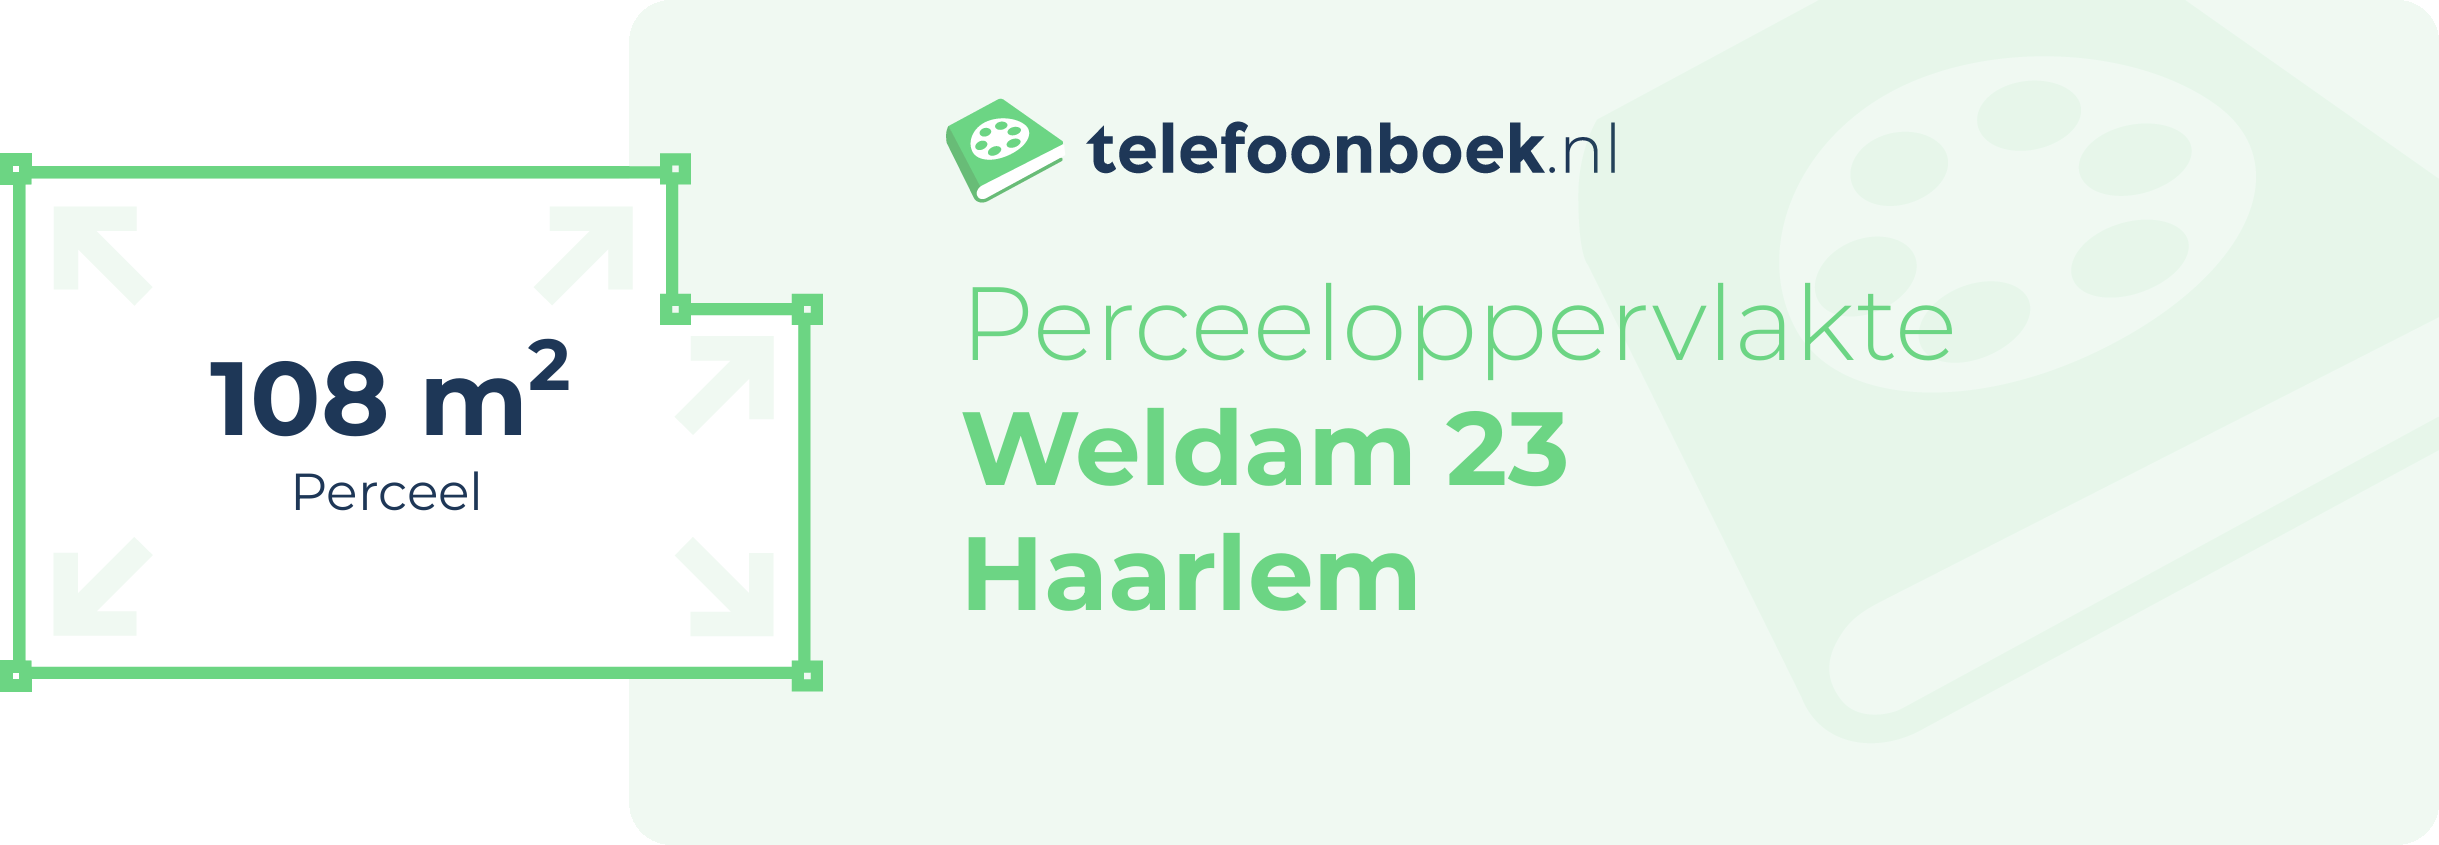 Perceeloppervlakte Weldam 23 Haarlem